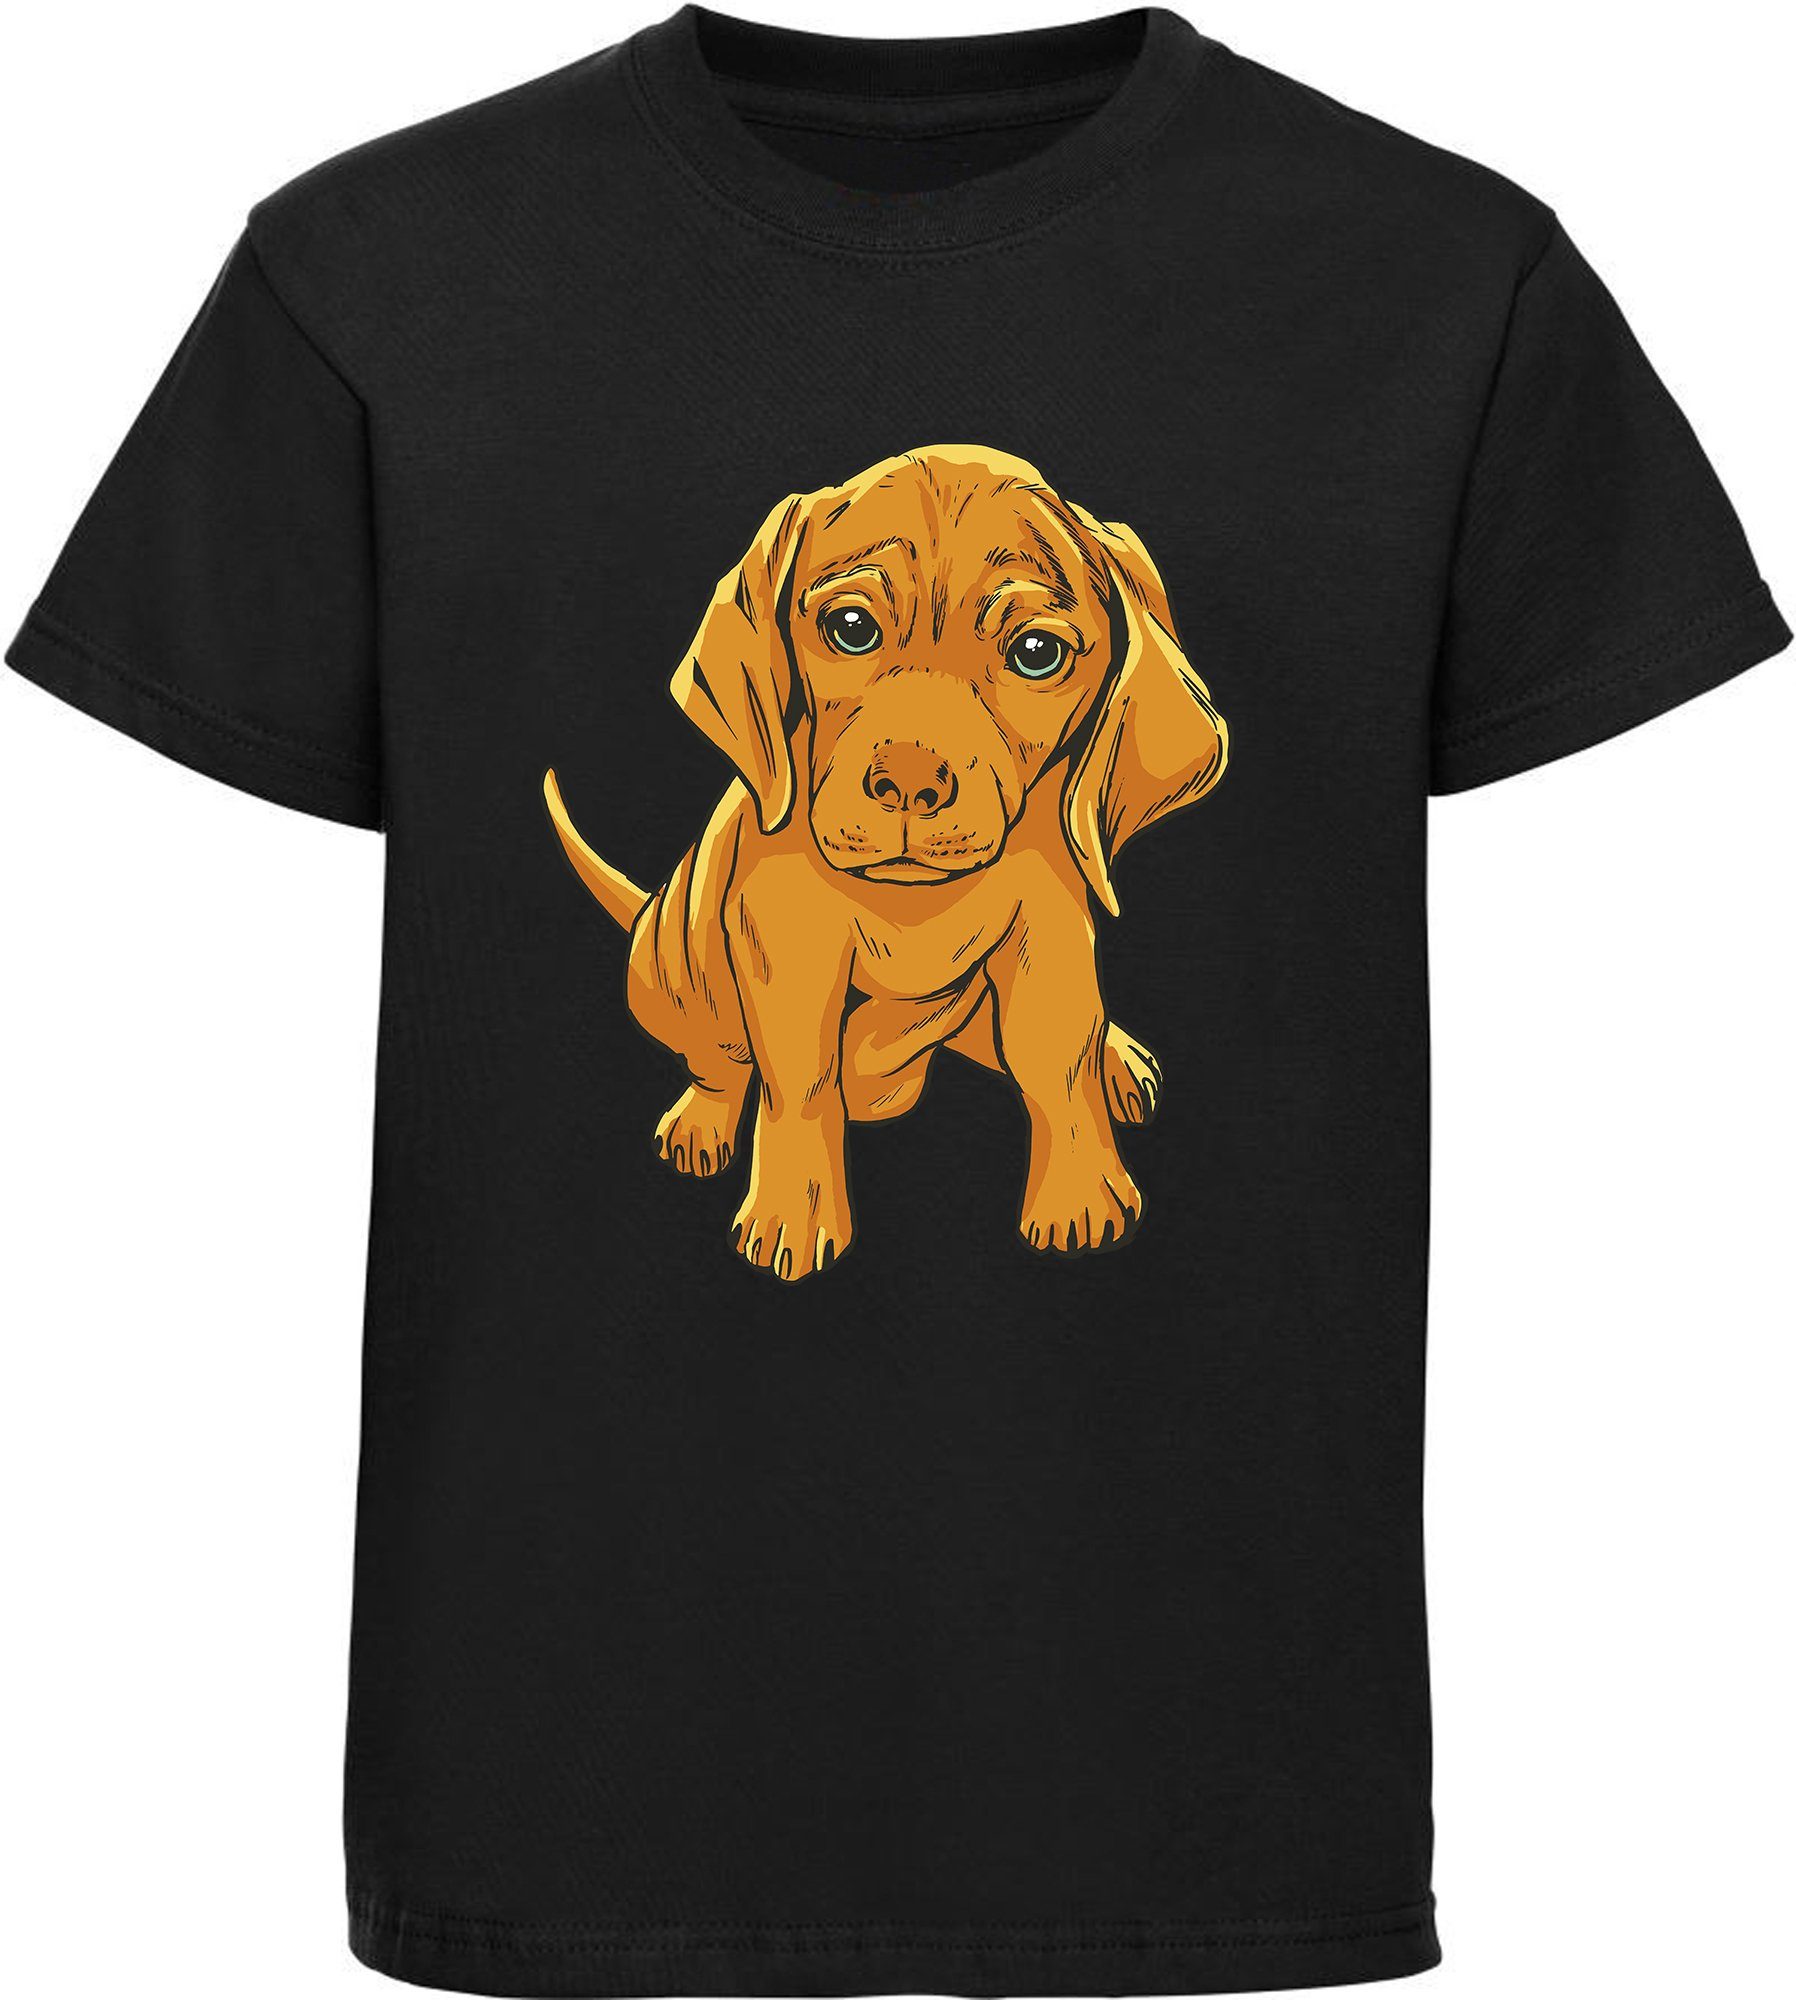 MyDesign24 Print-Shirt Kinder Hunde T-Shirt bedruckt - Süßer Welpe Baumwollshirt mit Aufdruck, i230 schwarz